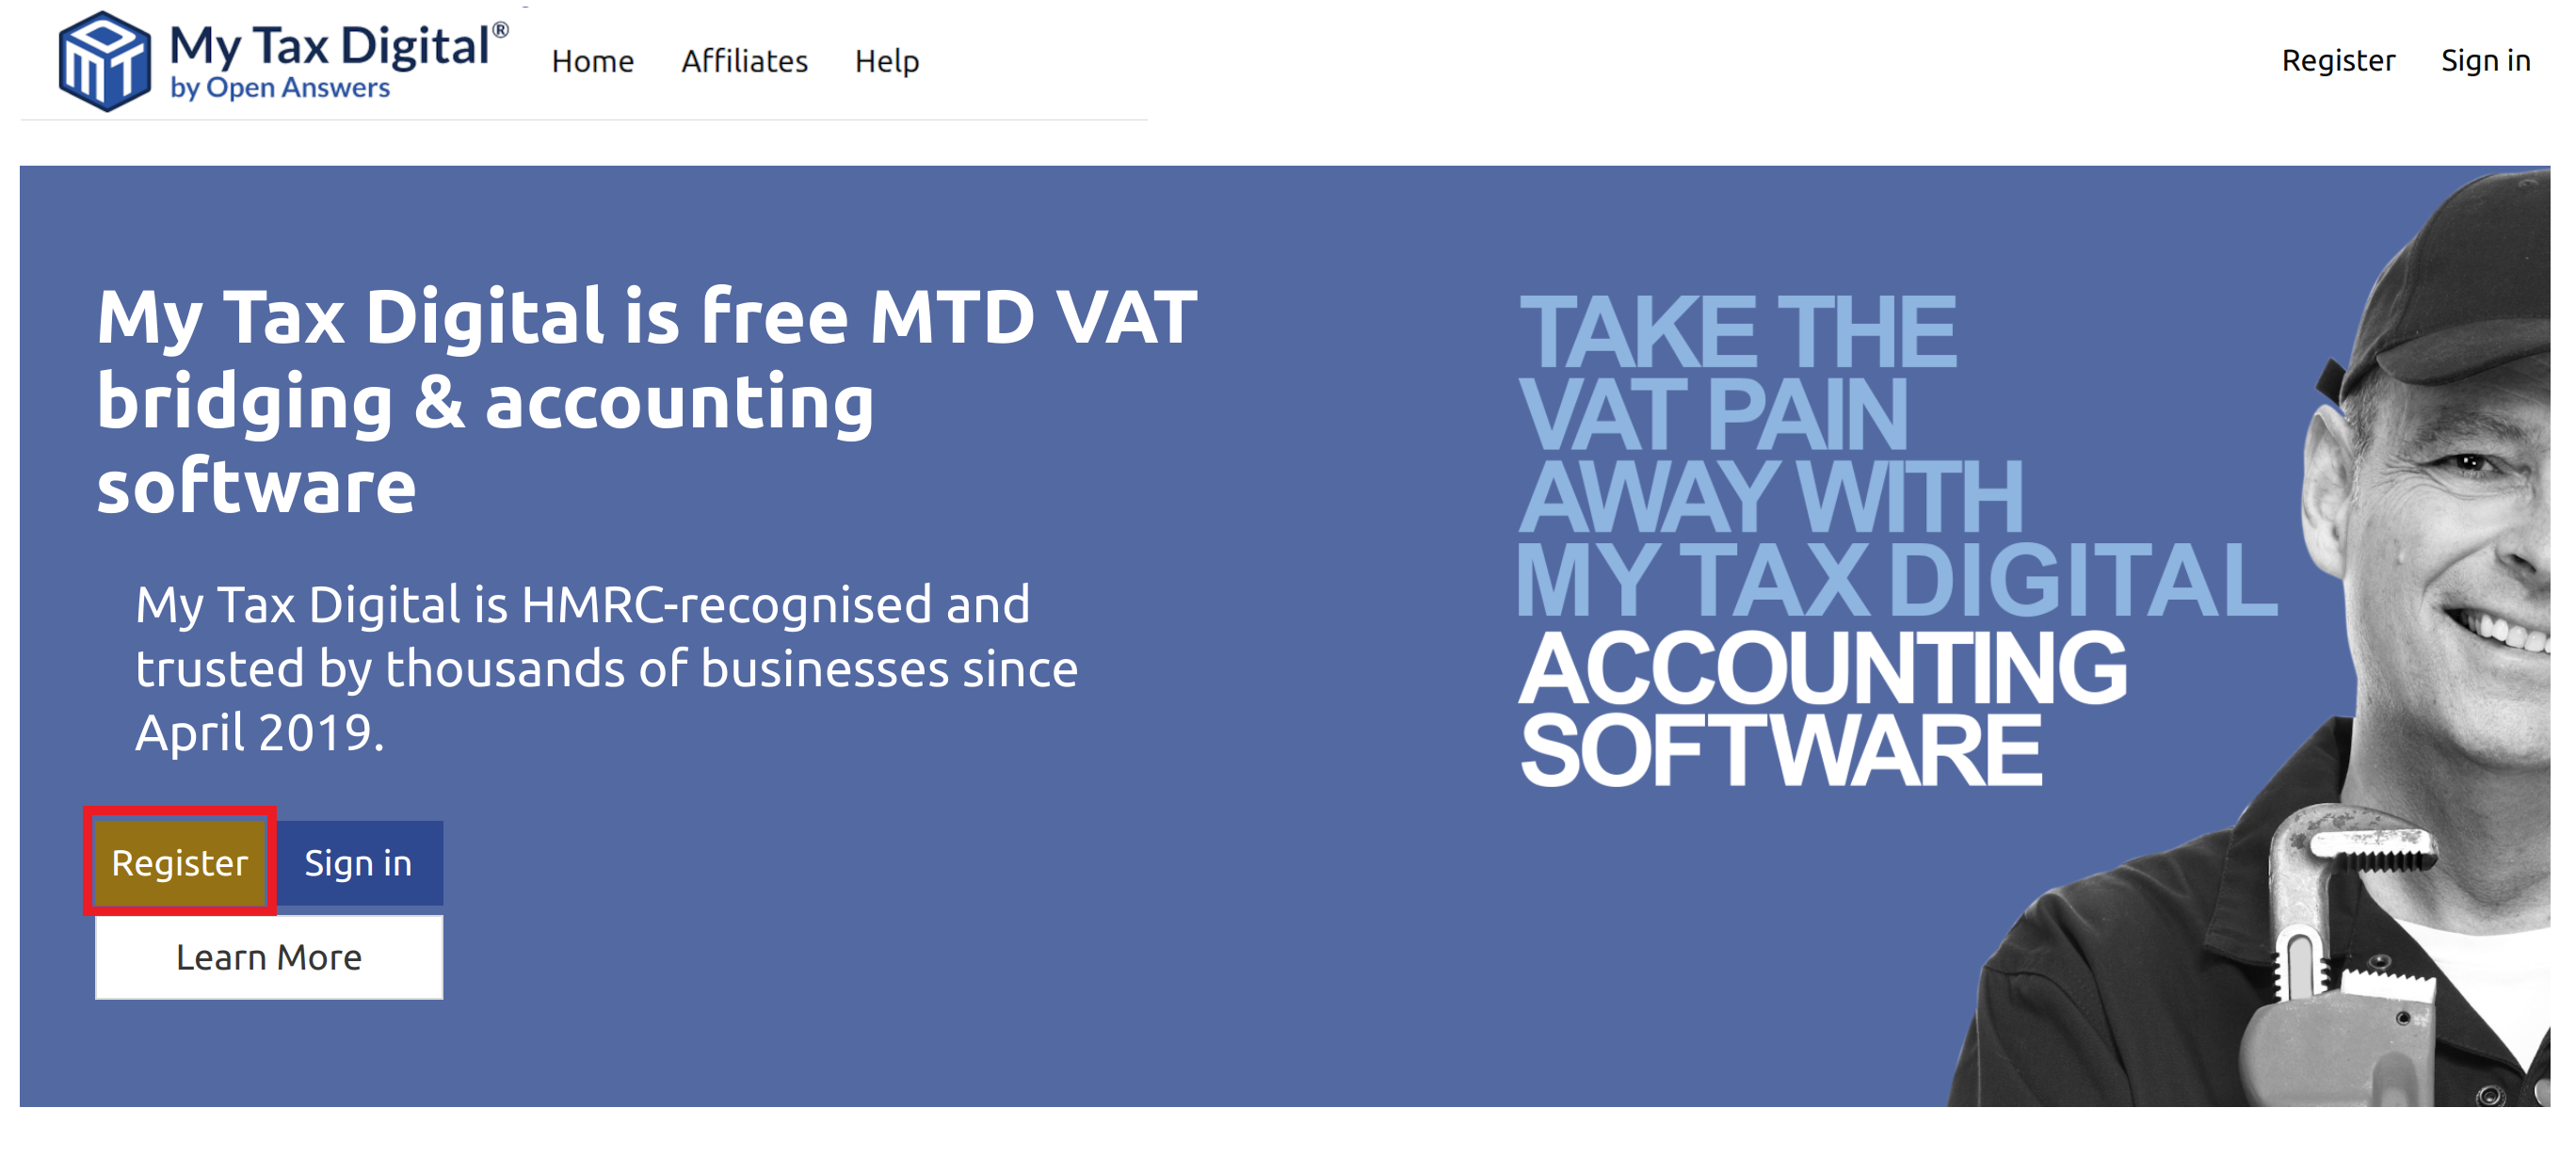 My Tax Digital free Making Tax Digital for VAT bridging & accounting software registration